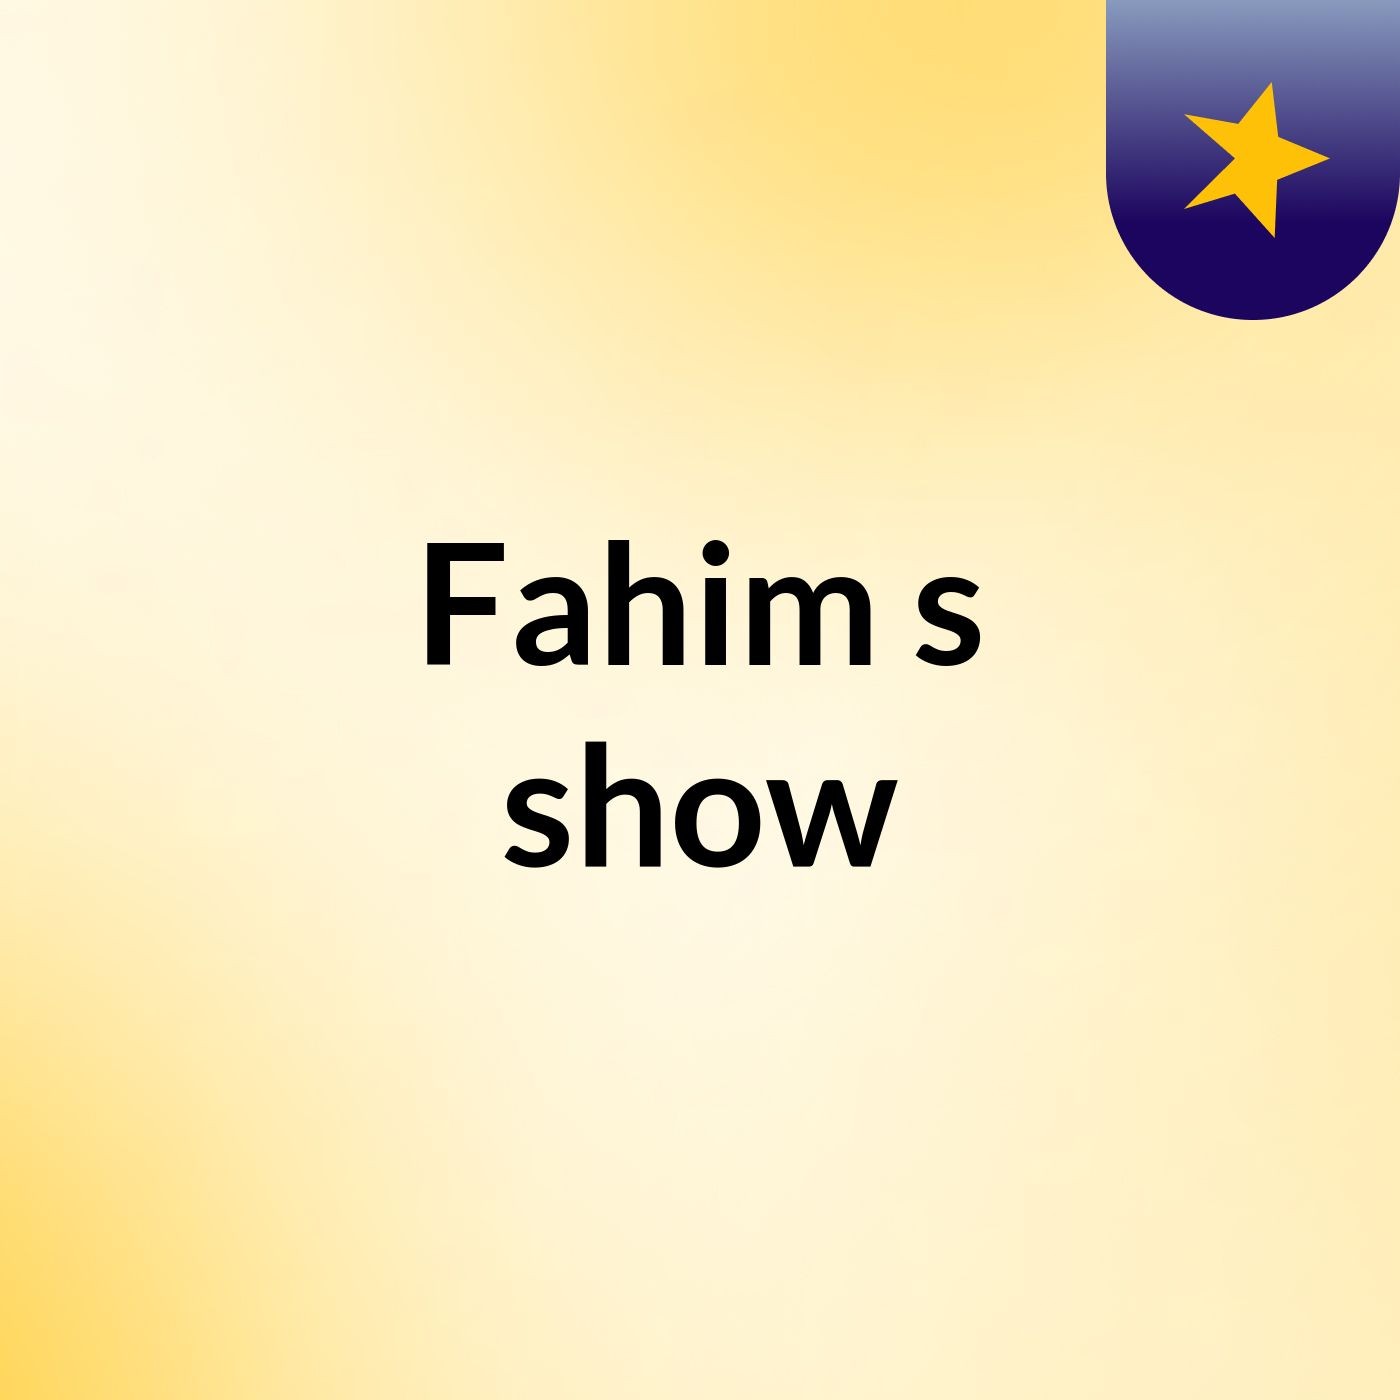 Fahim's show